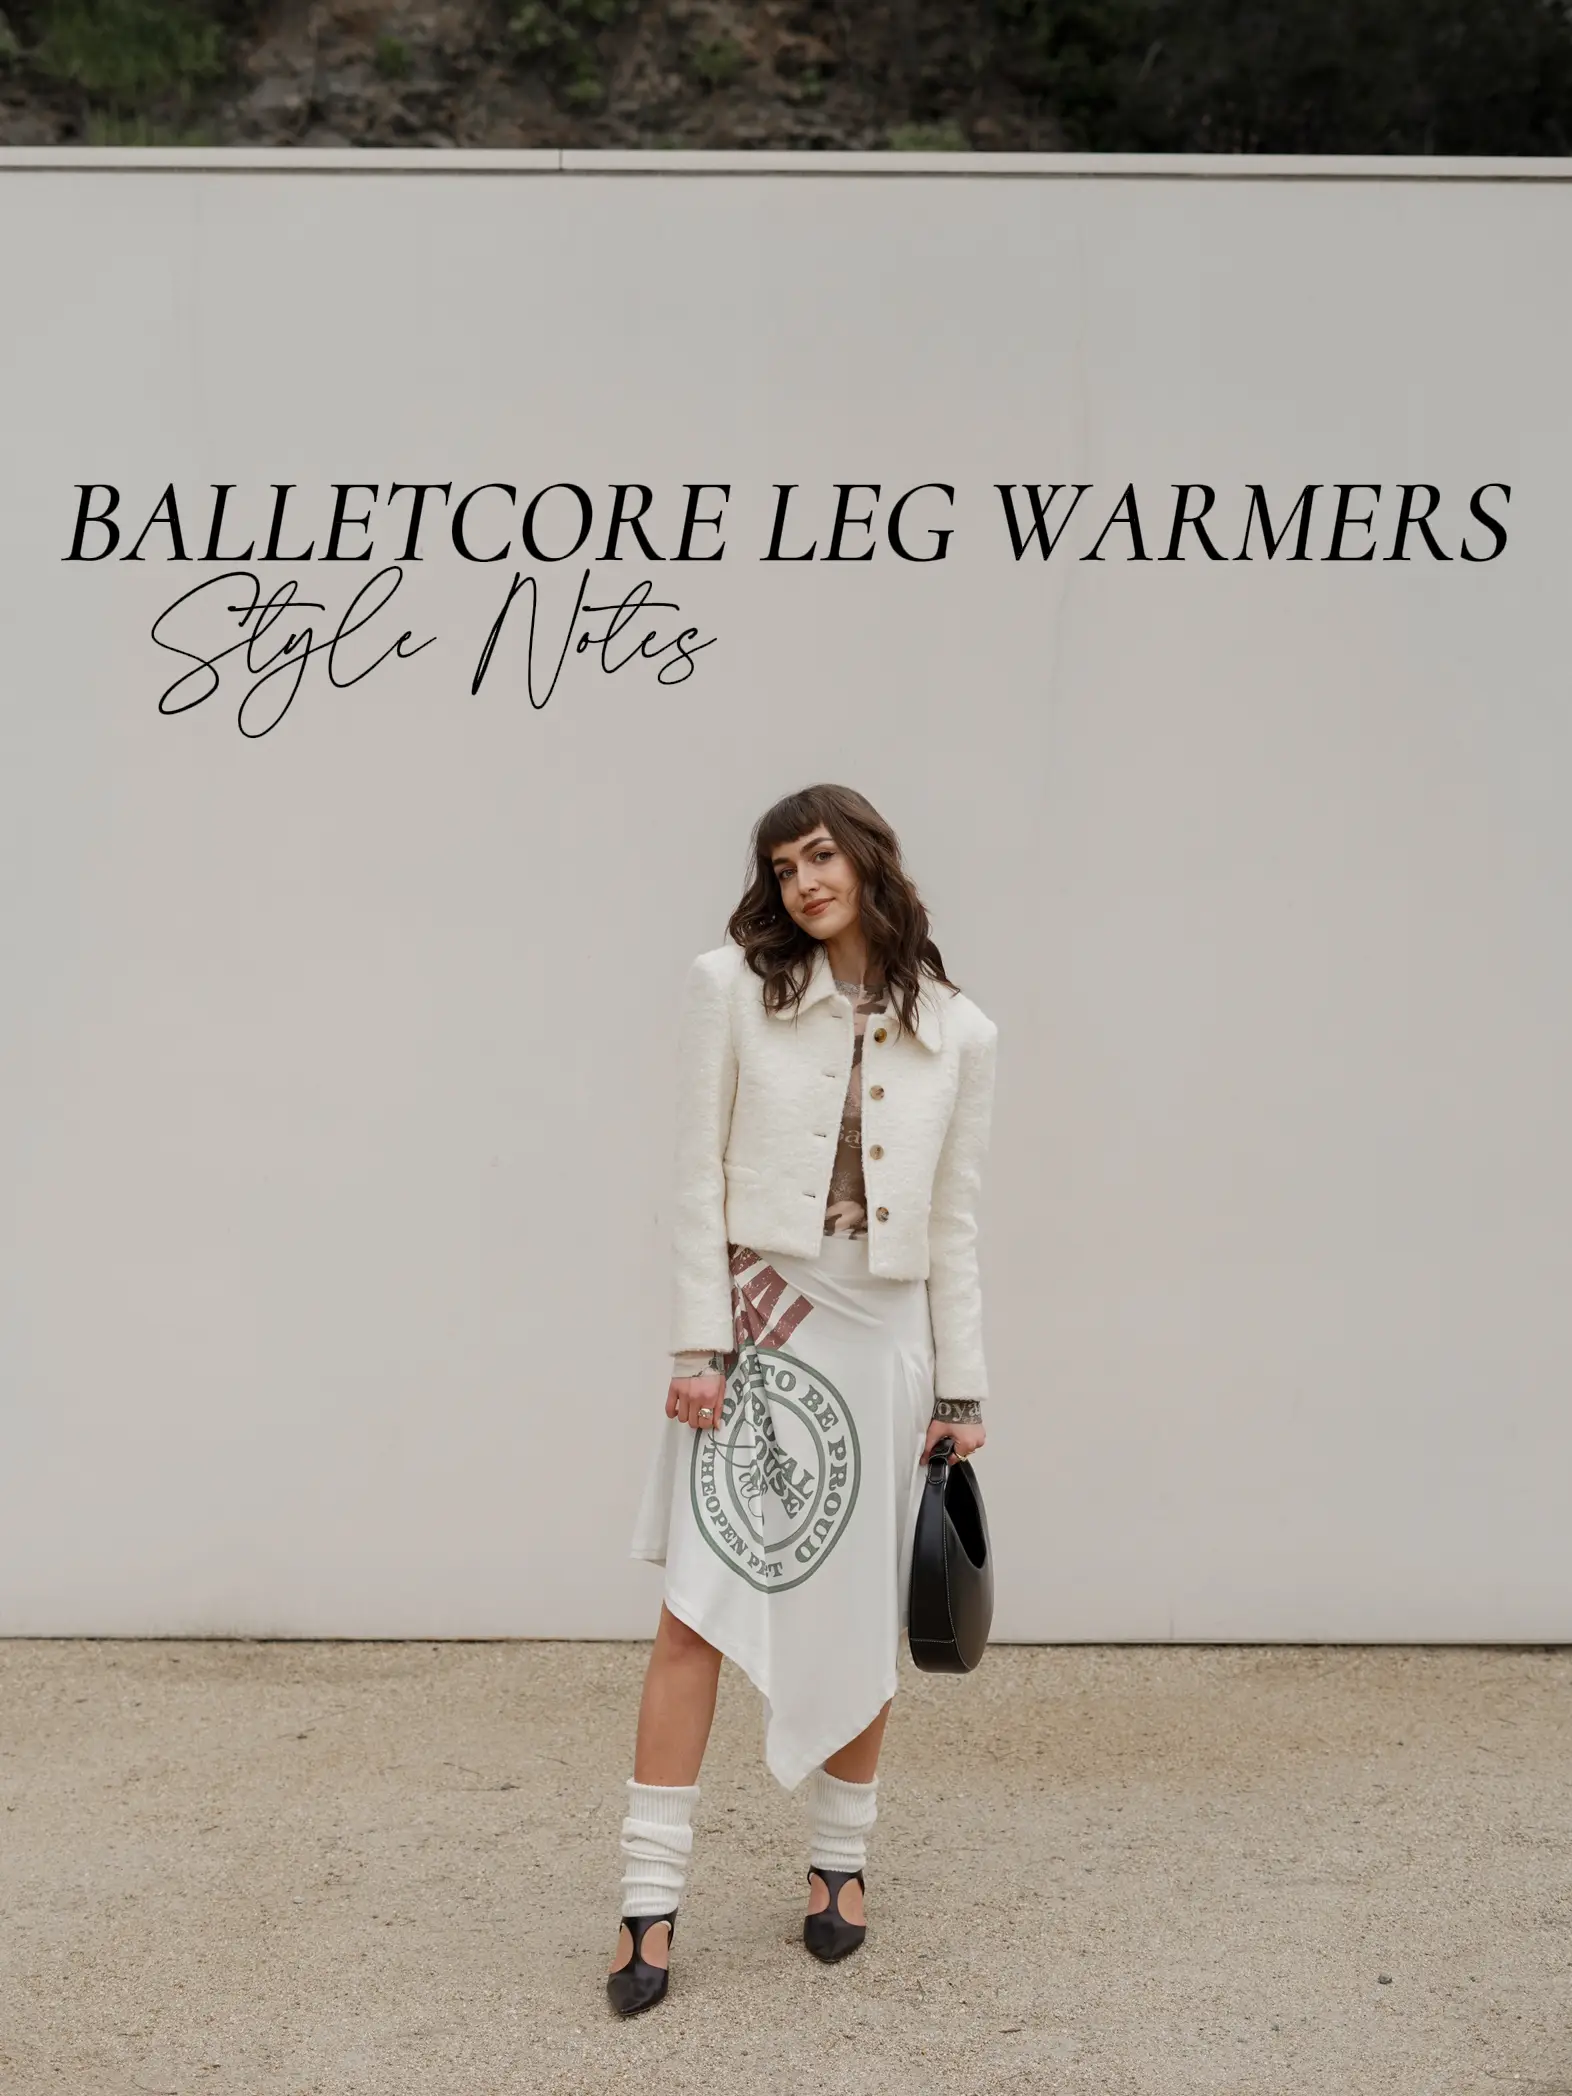 Leg warmers season 🩰☁️🦢 Fall outfits, fall fashion, coquette aesthetic, leg  warmers, Pinterest inspired, feminine style, balle